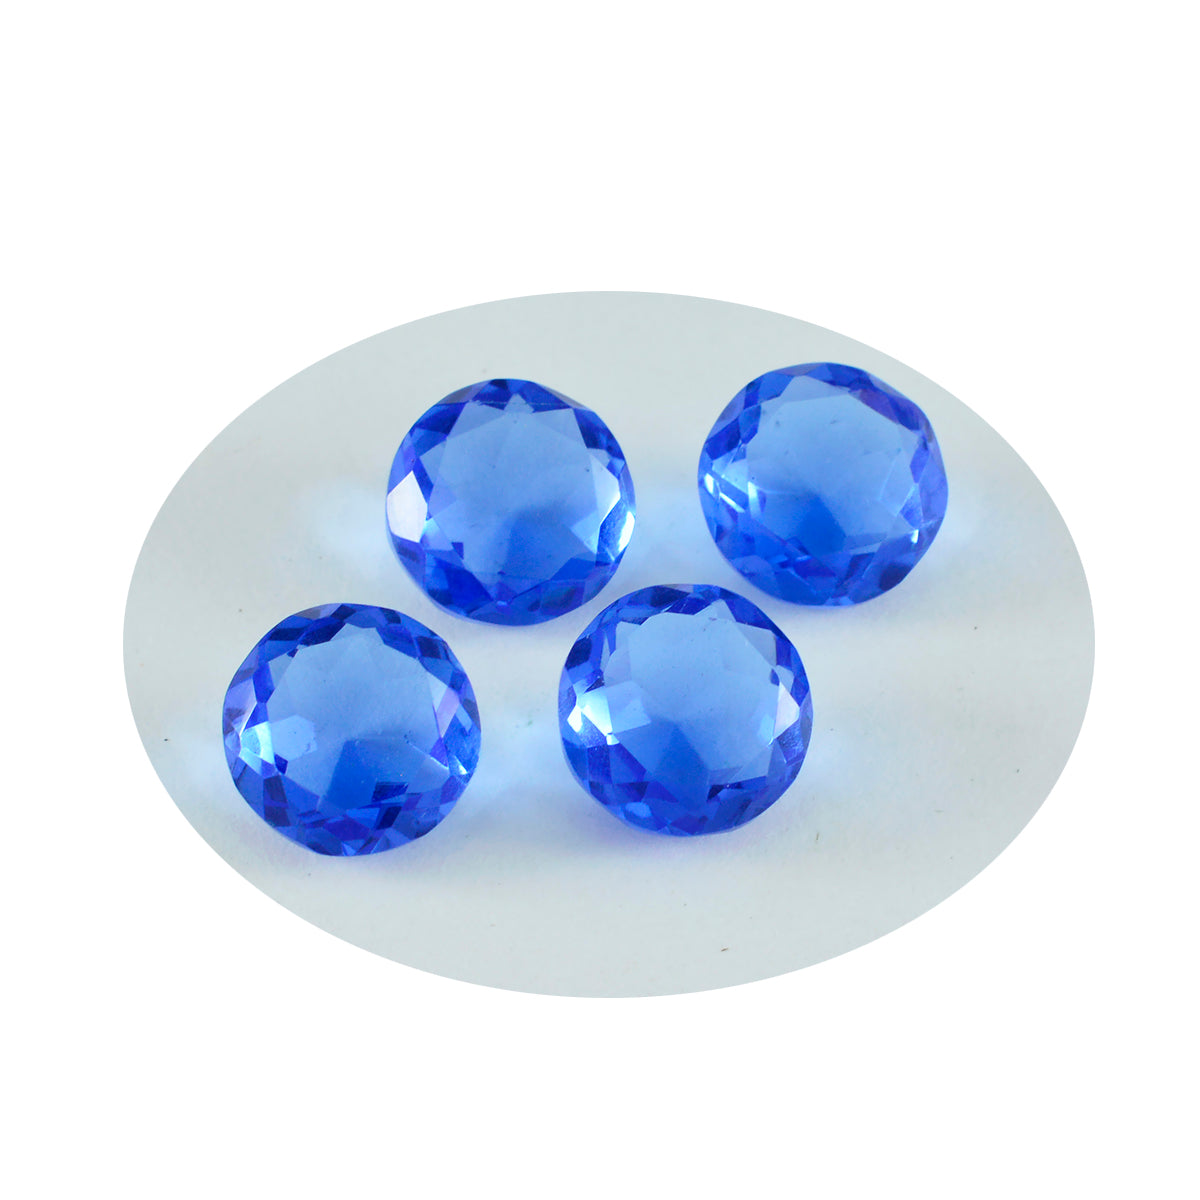 riyogems 1pc ブルー サファイア CZ ファセット 10x10 mm ラウンド形状素晴らしい品質ルース宝石